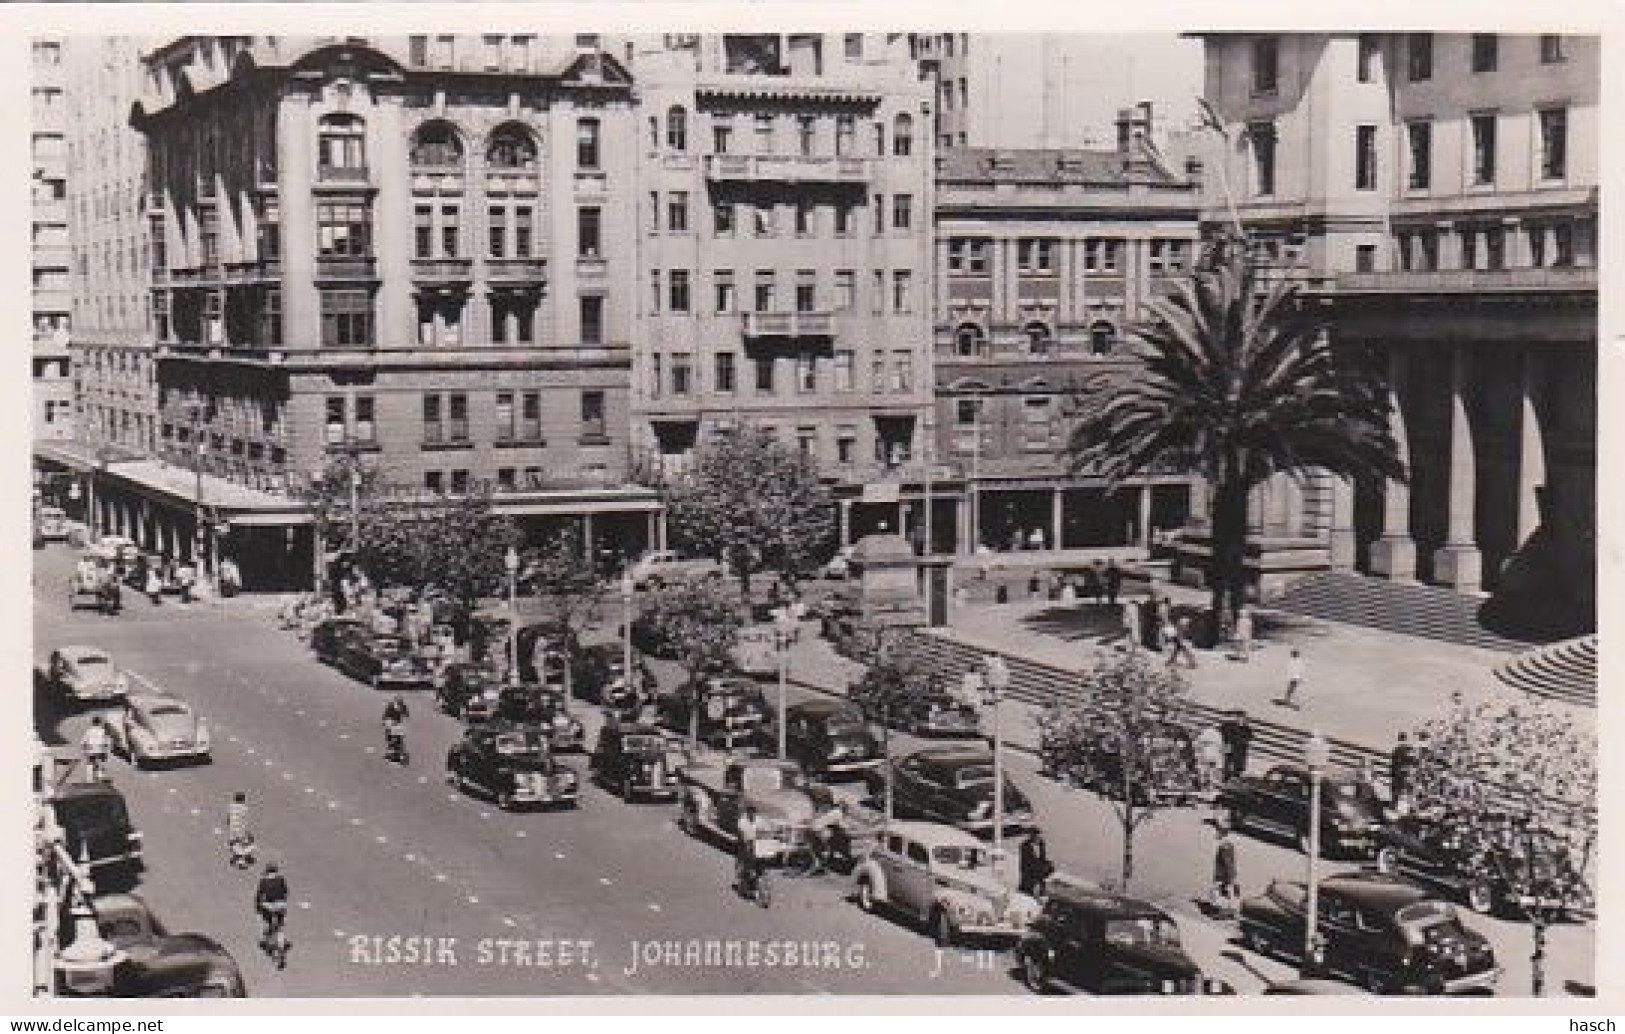 183035Johannesburg, Rissik Street - South Africa